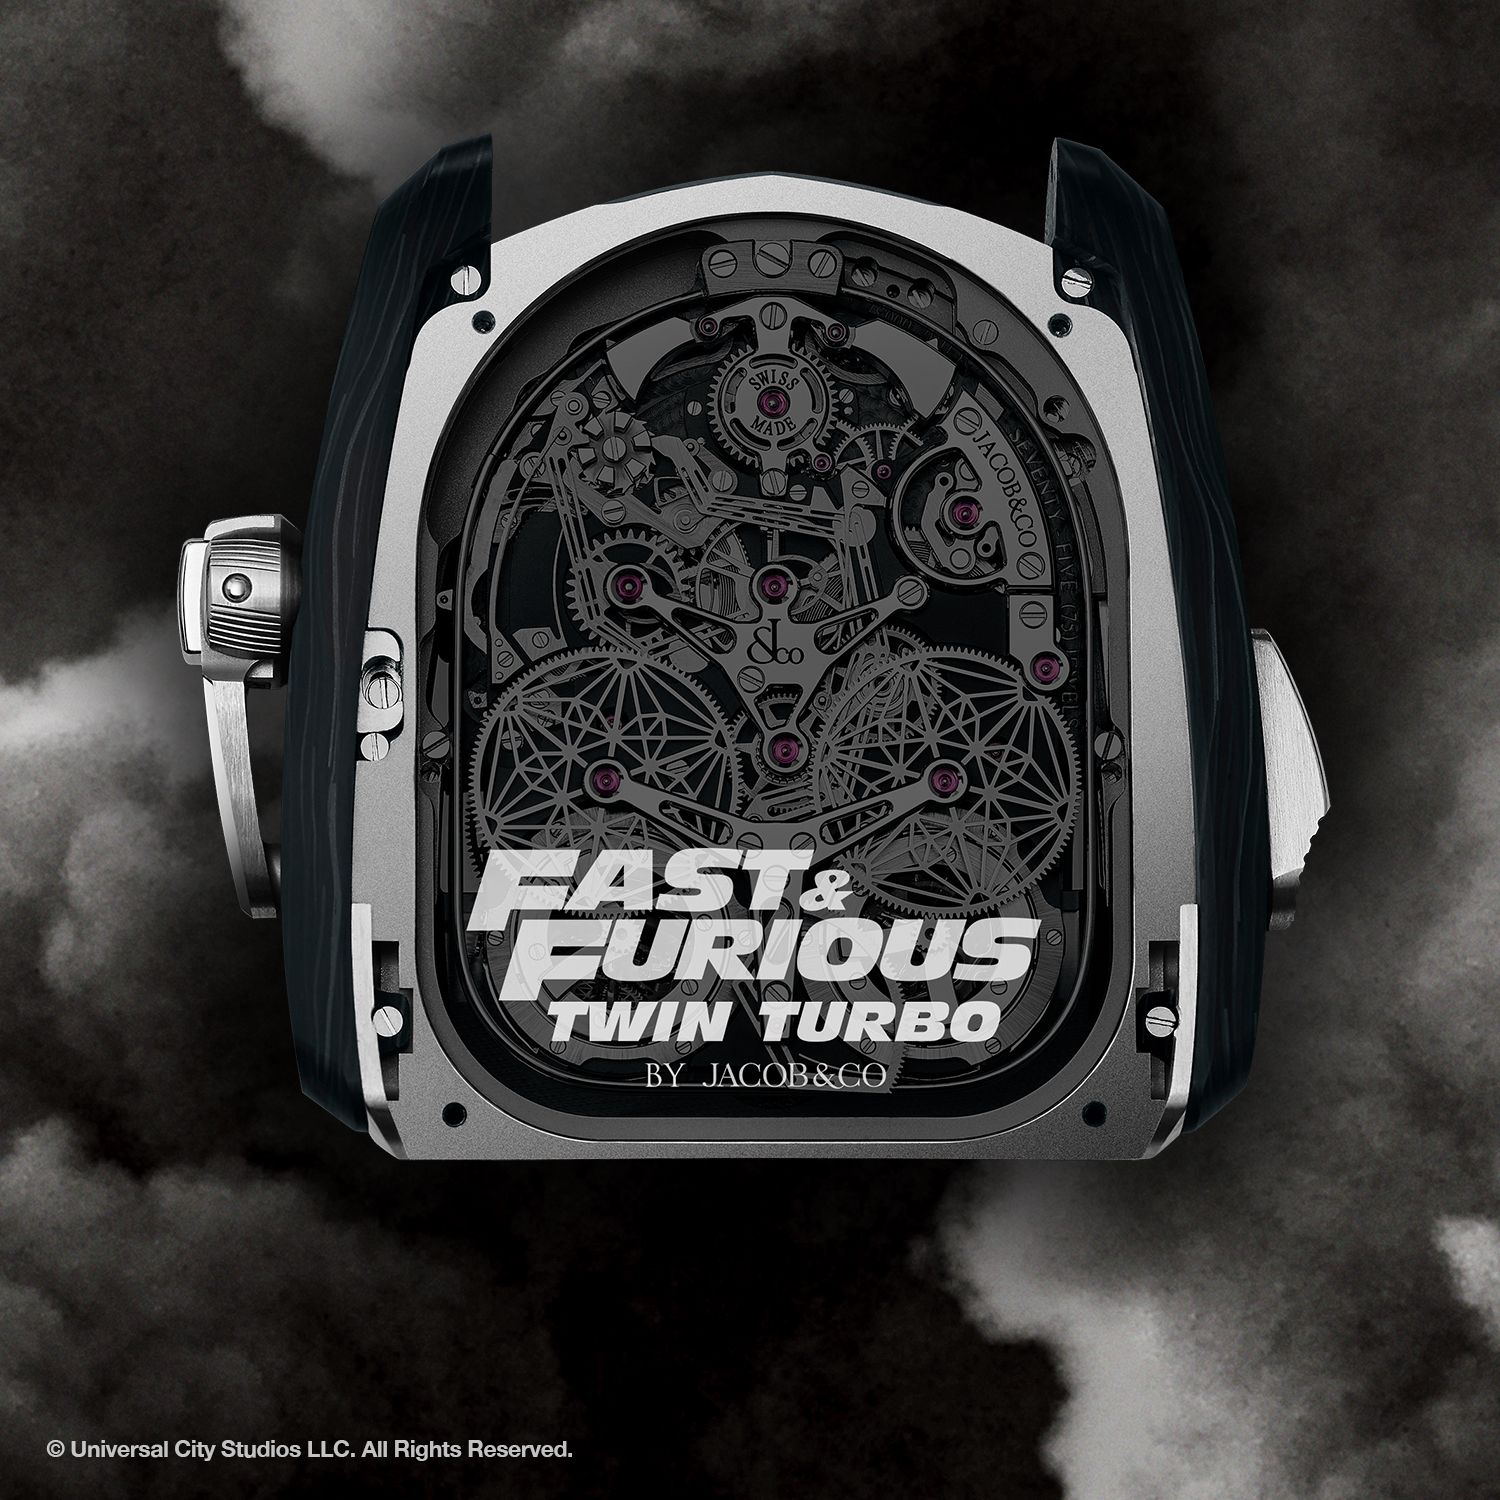 Jacob & Co "Fast & Furious" Turbo Twin Watch back